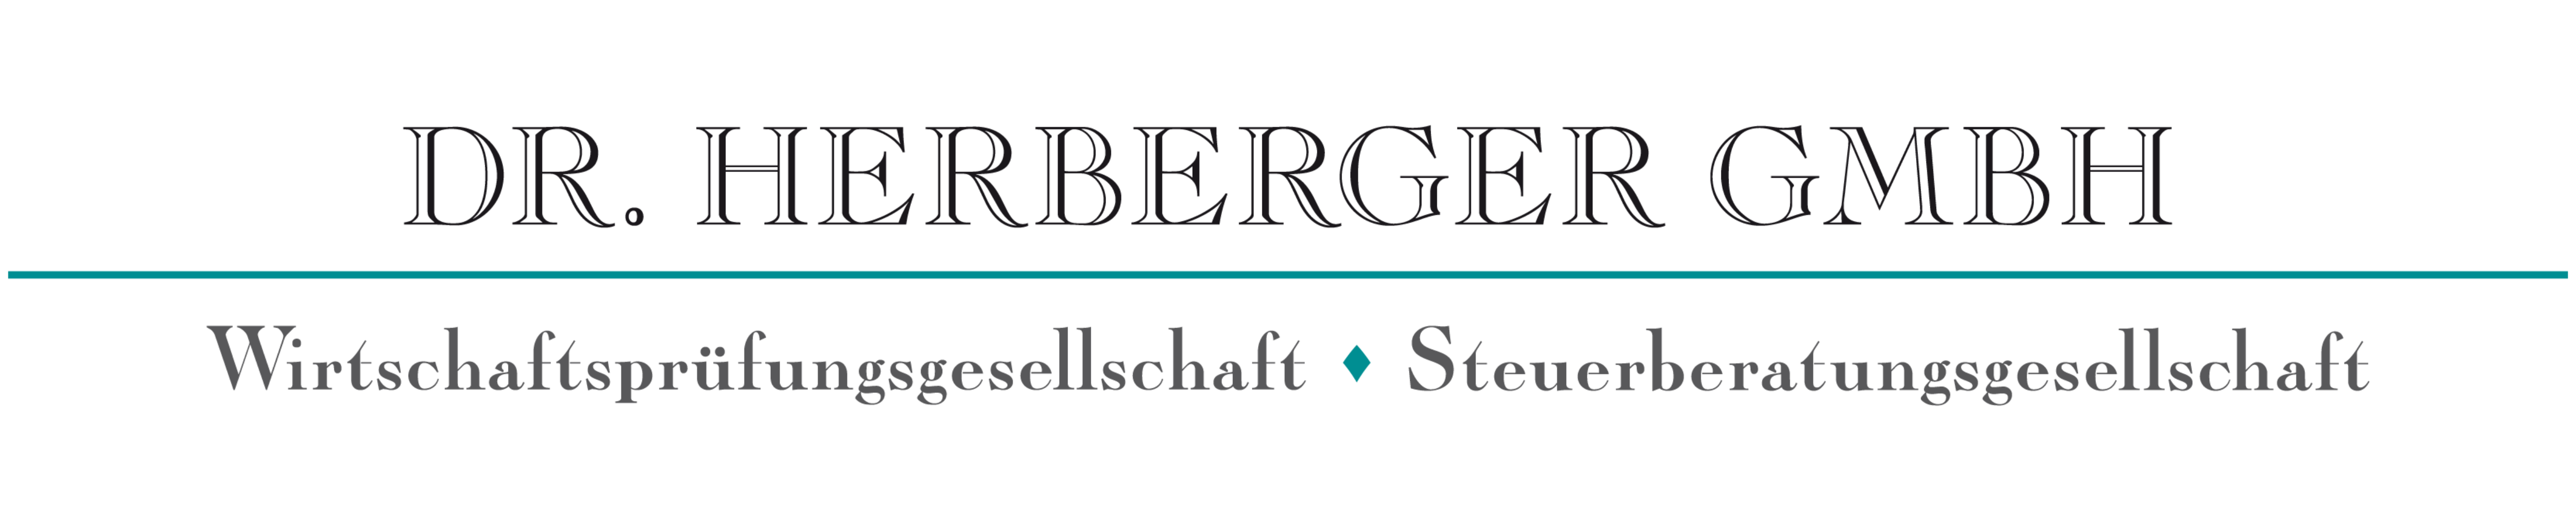 Dr. Herberger GmbH logo